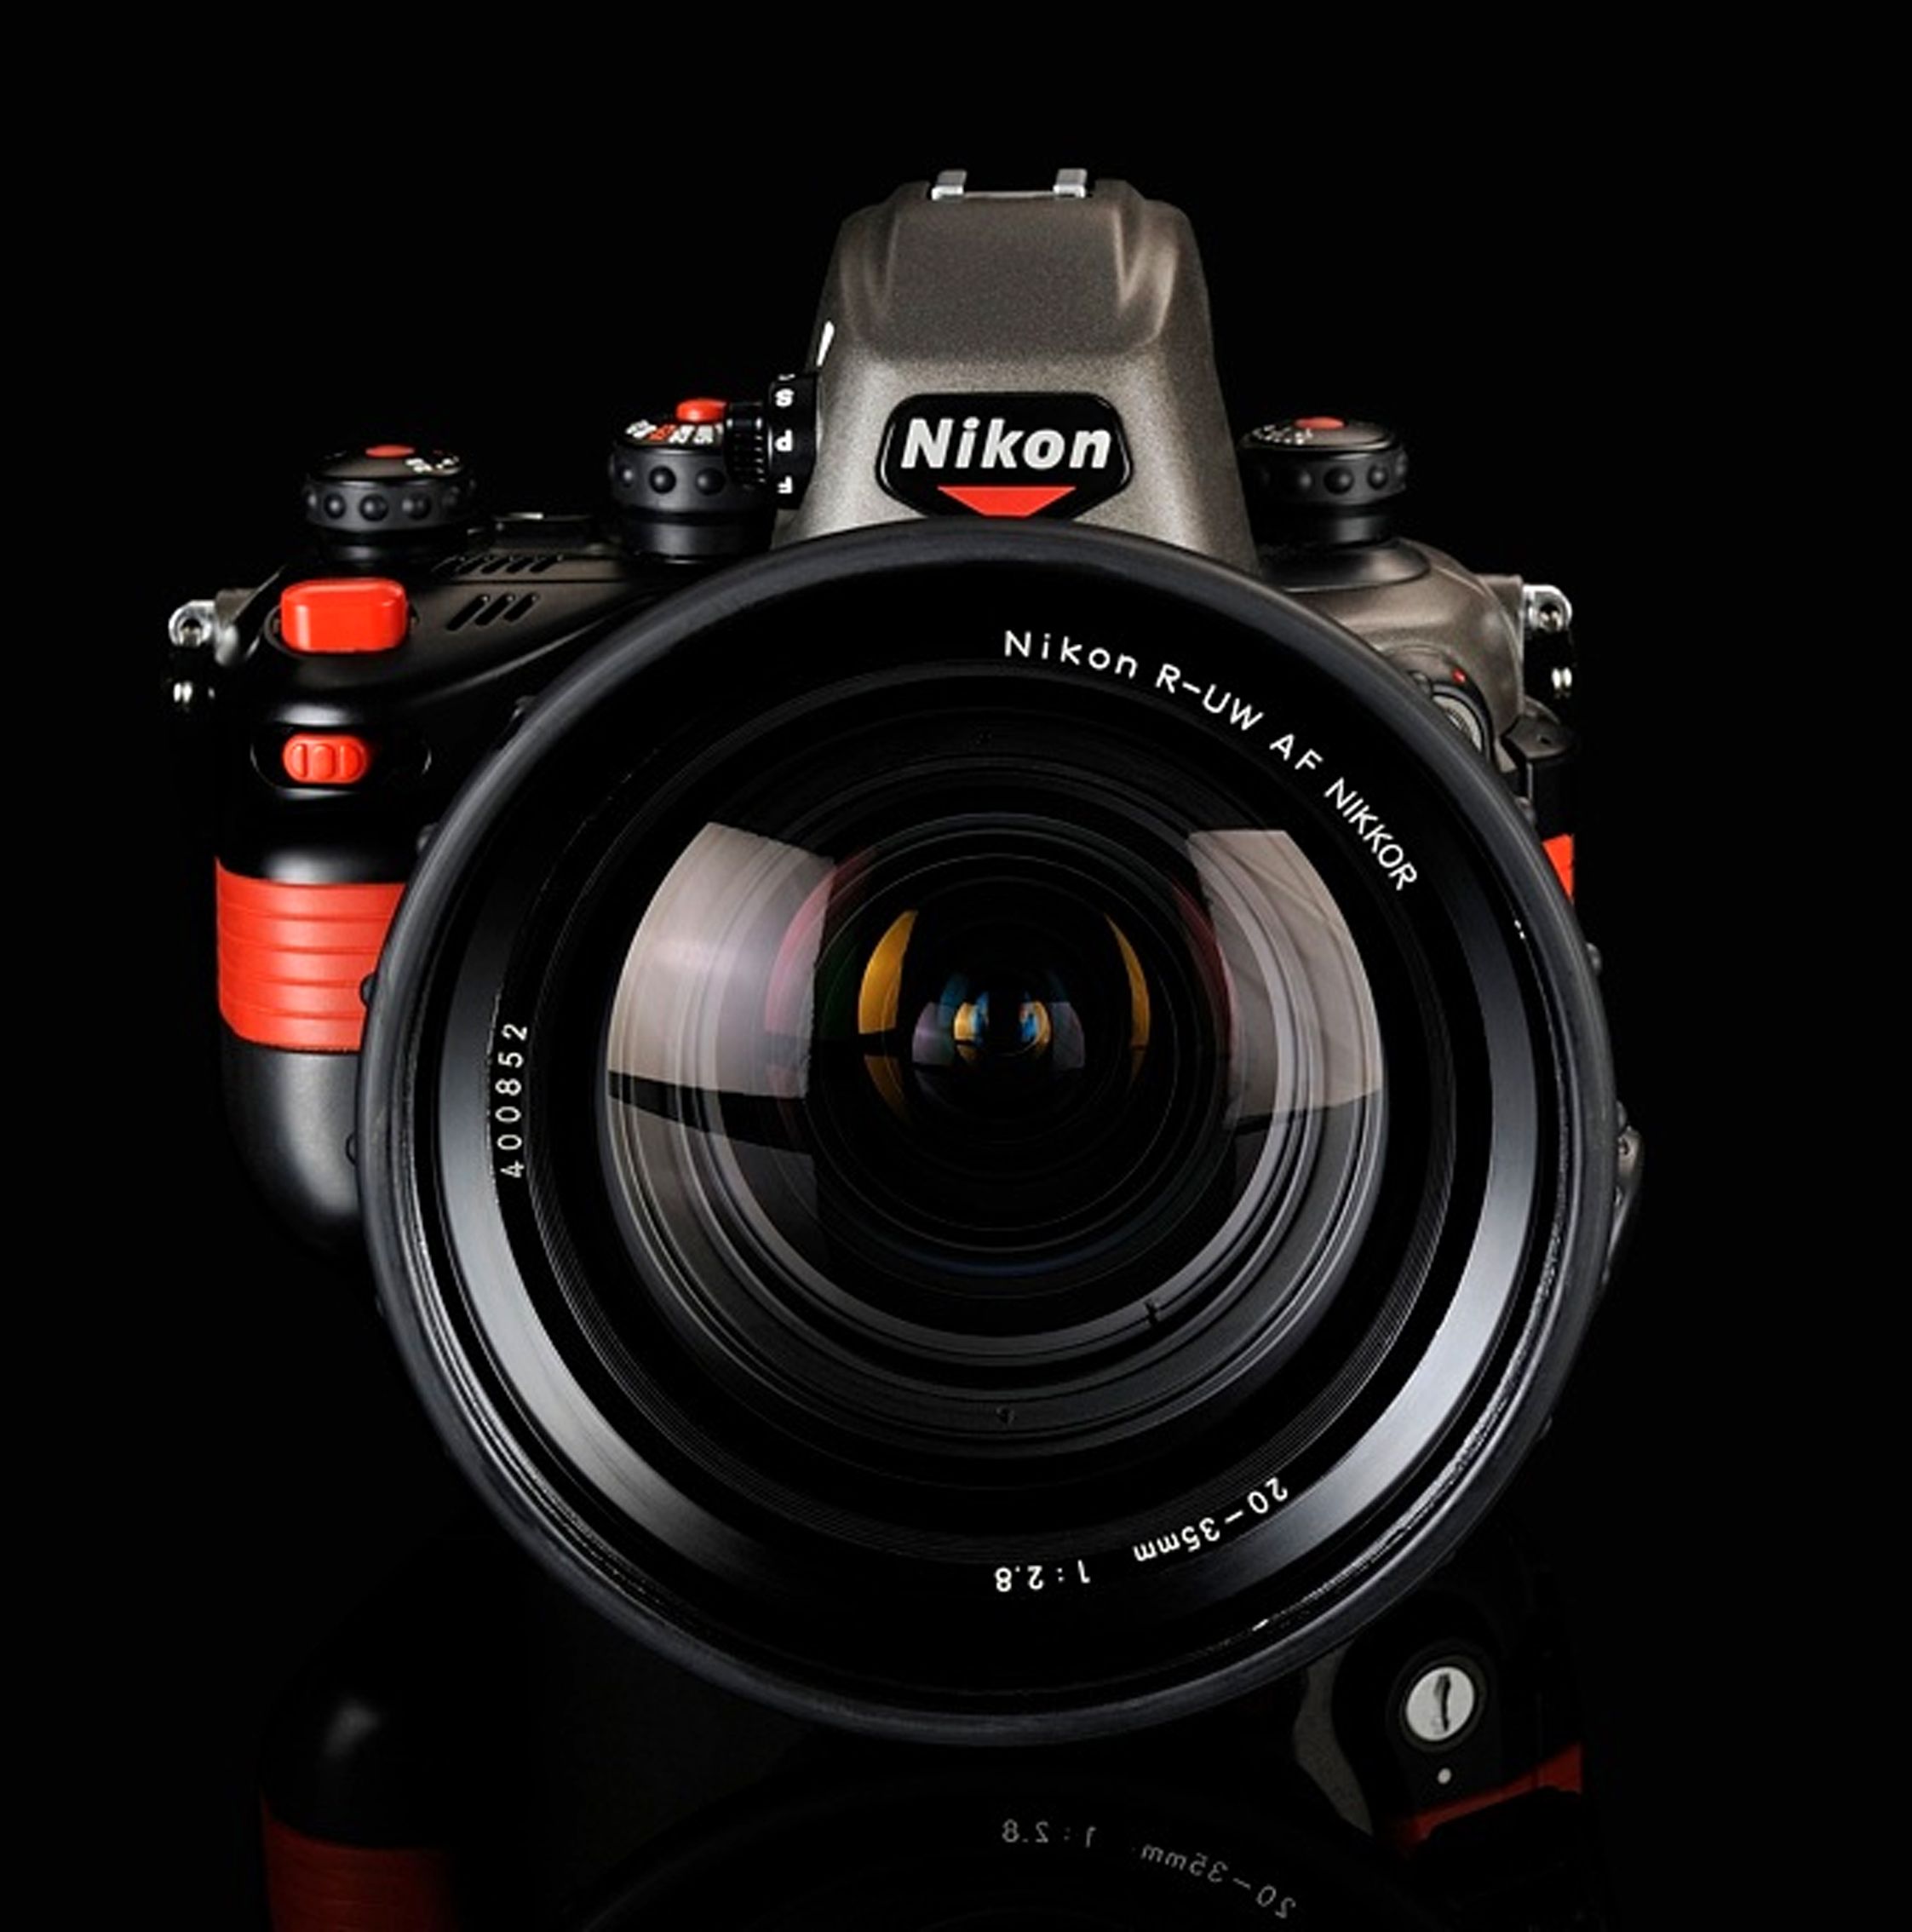 Nikonos RS underwater camera film | Camera / Photo | Pinterest ...